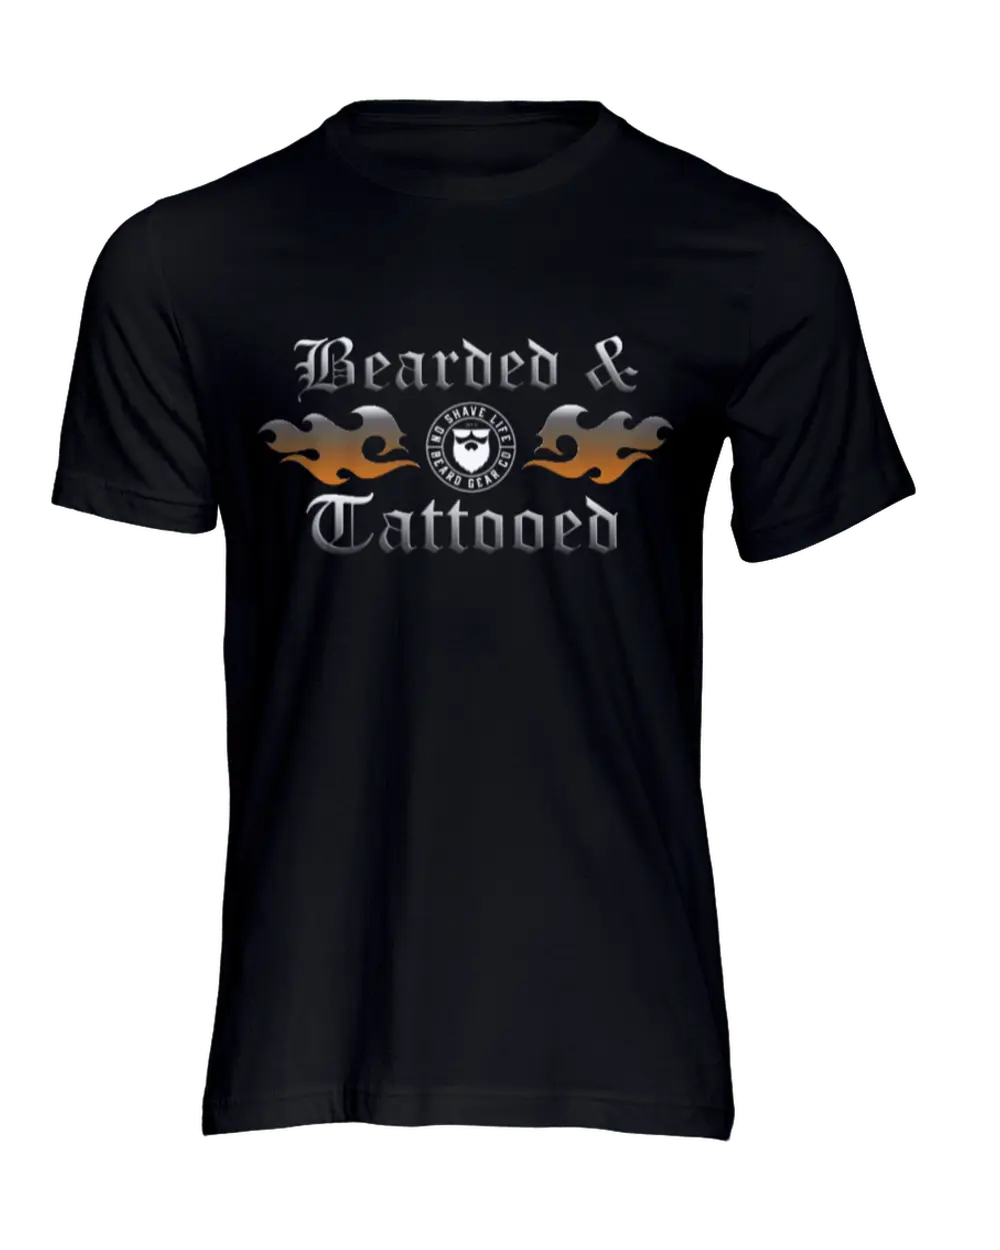 Bearded & Tattooed Black Men's T-Shirt